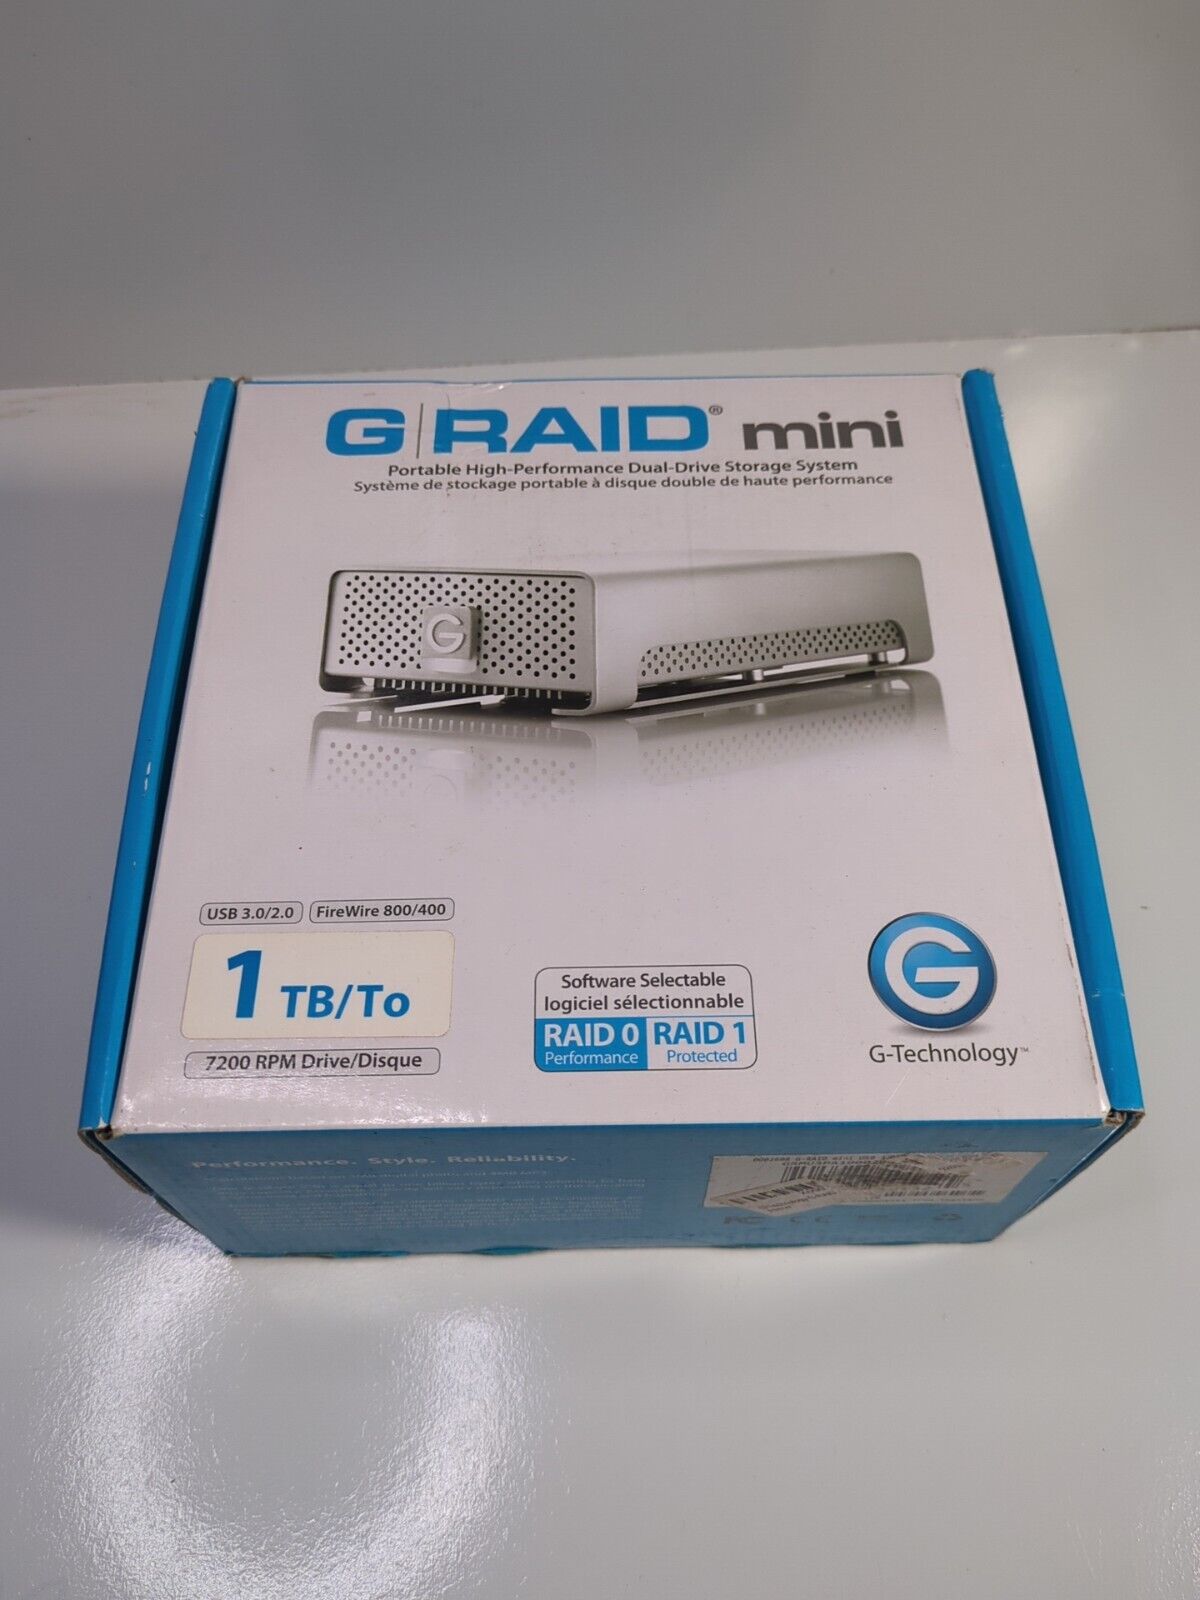 G-Technology G-RAID Mini 1 TB Dual External Hard Drive